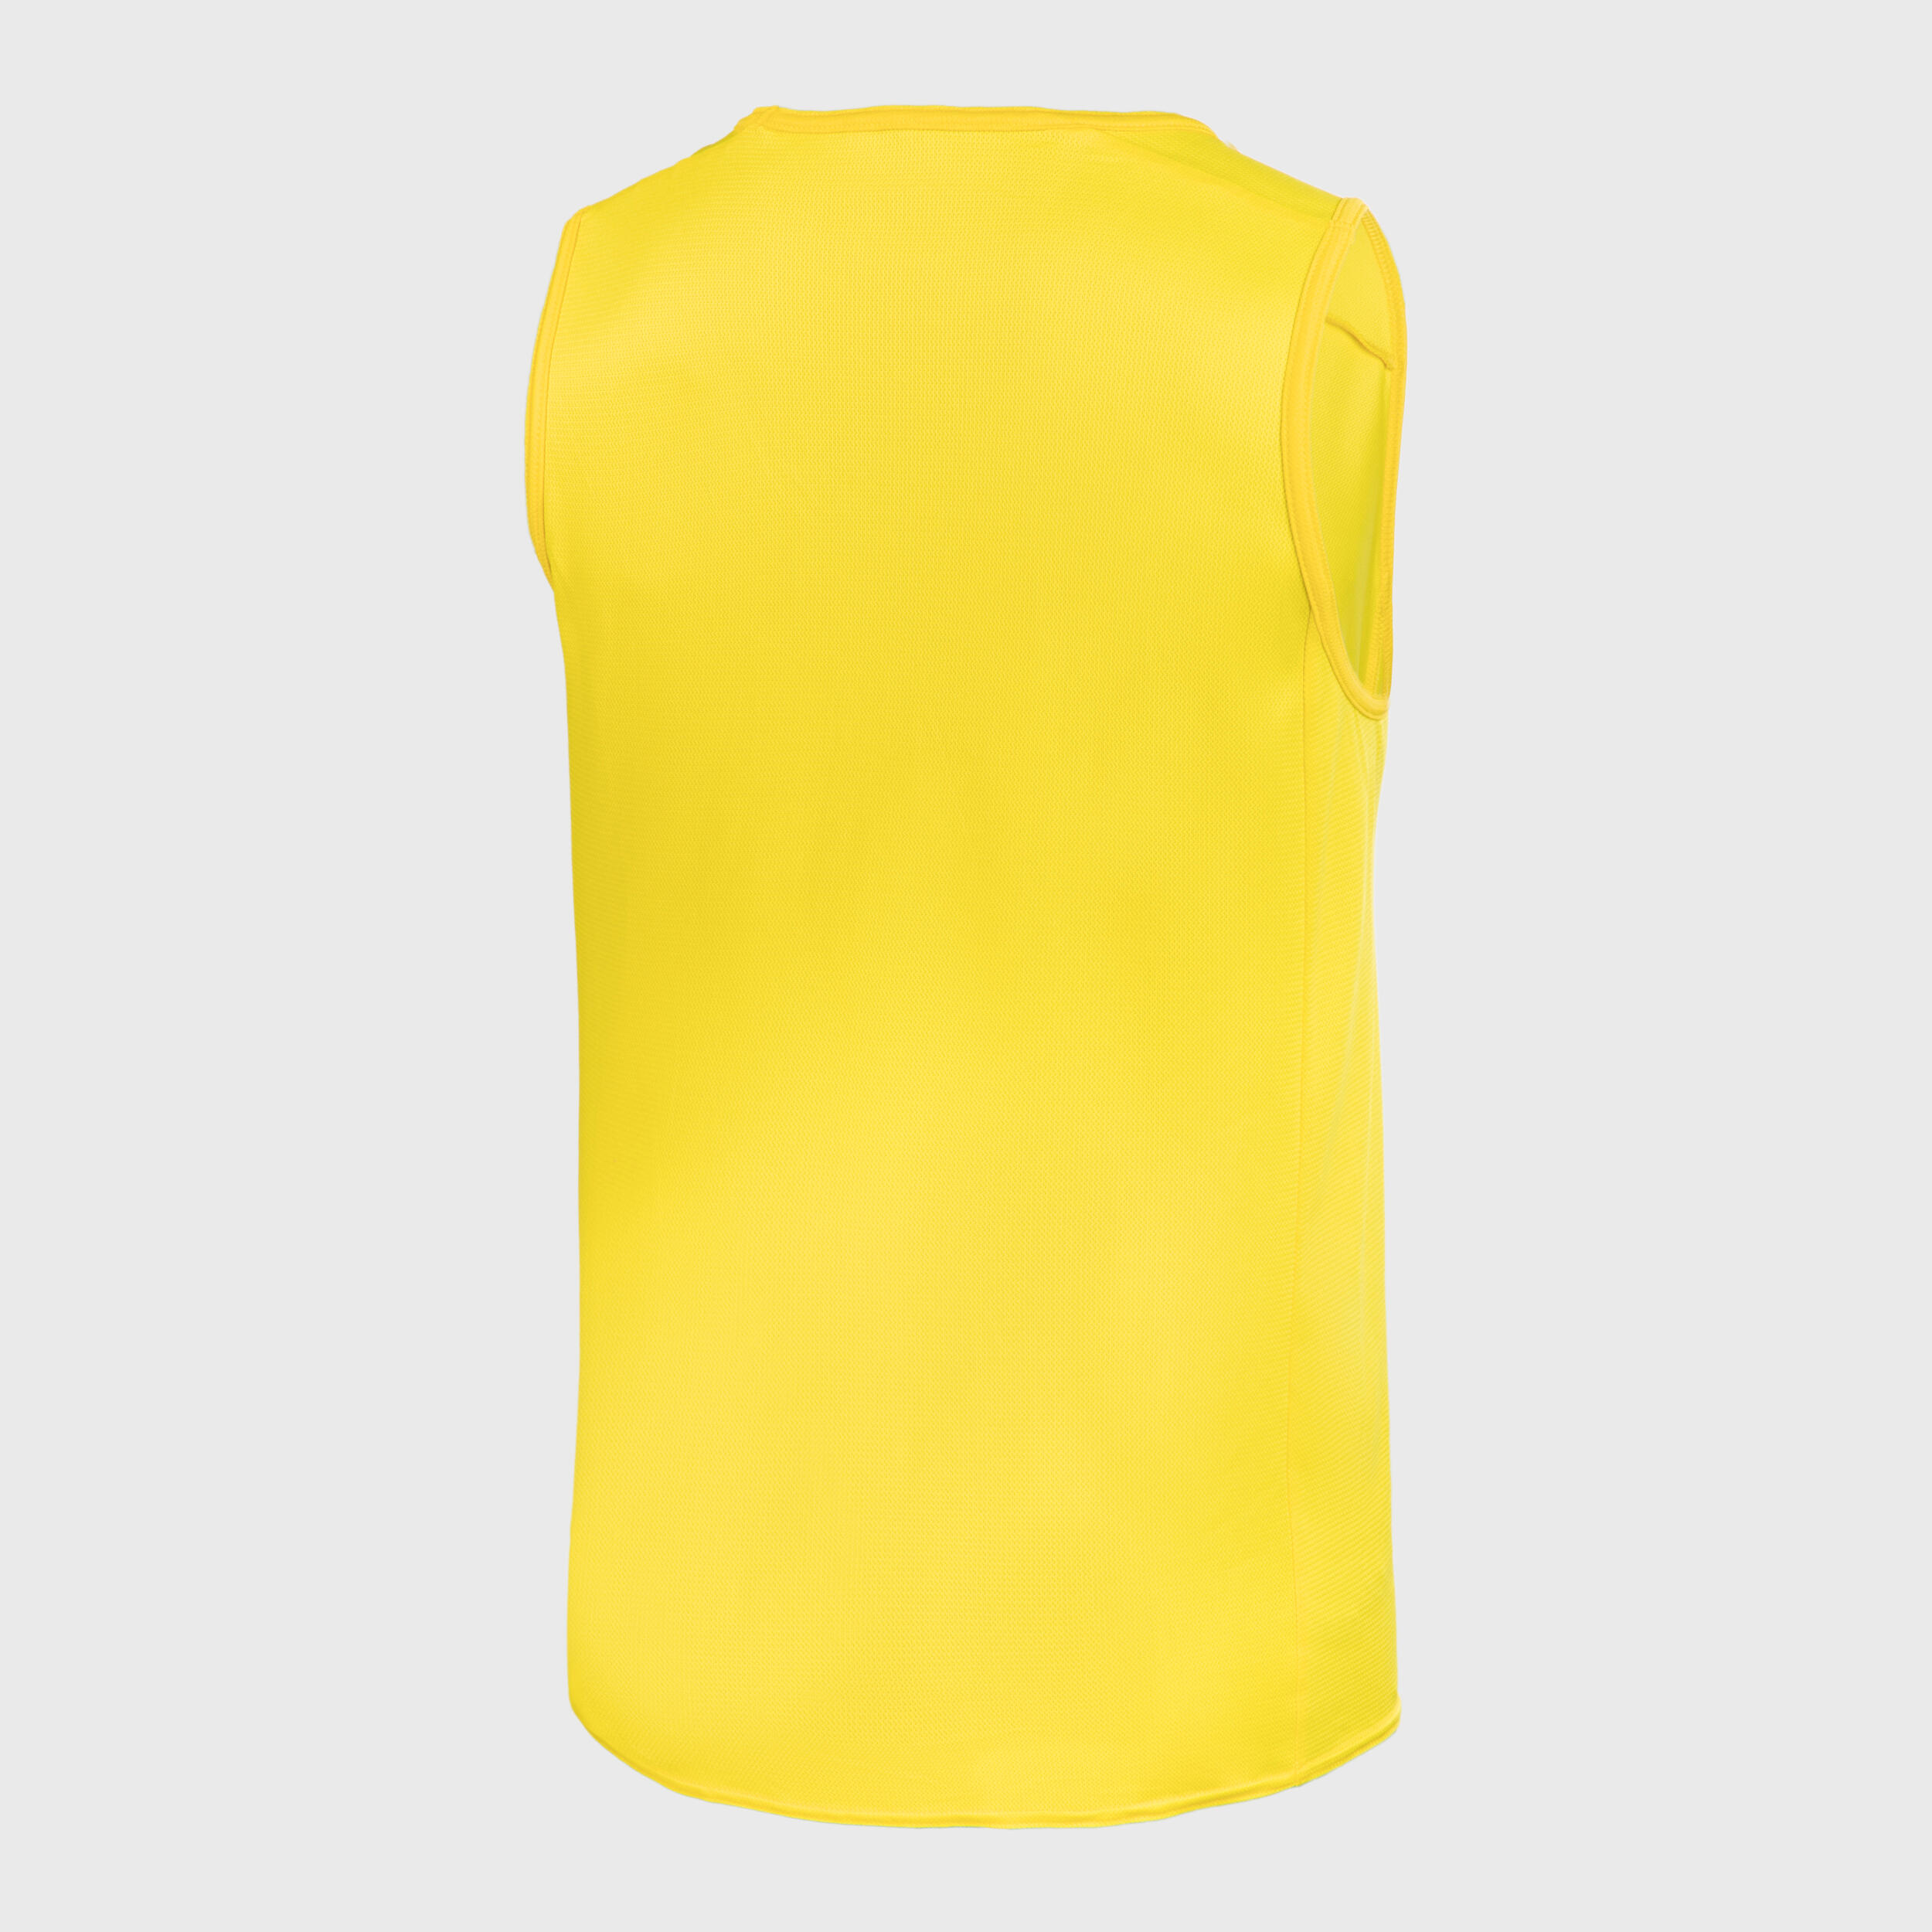 Men's/Women's Sleeveless Basketball Jersey T100 - Yellow 3/4